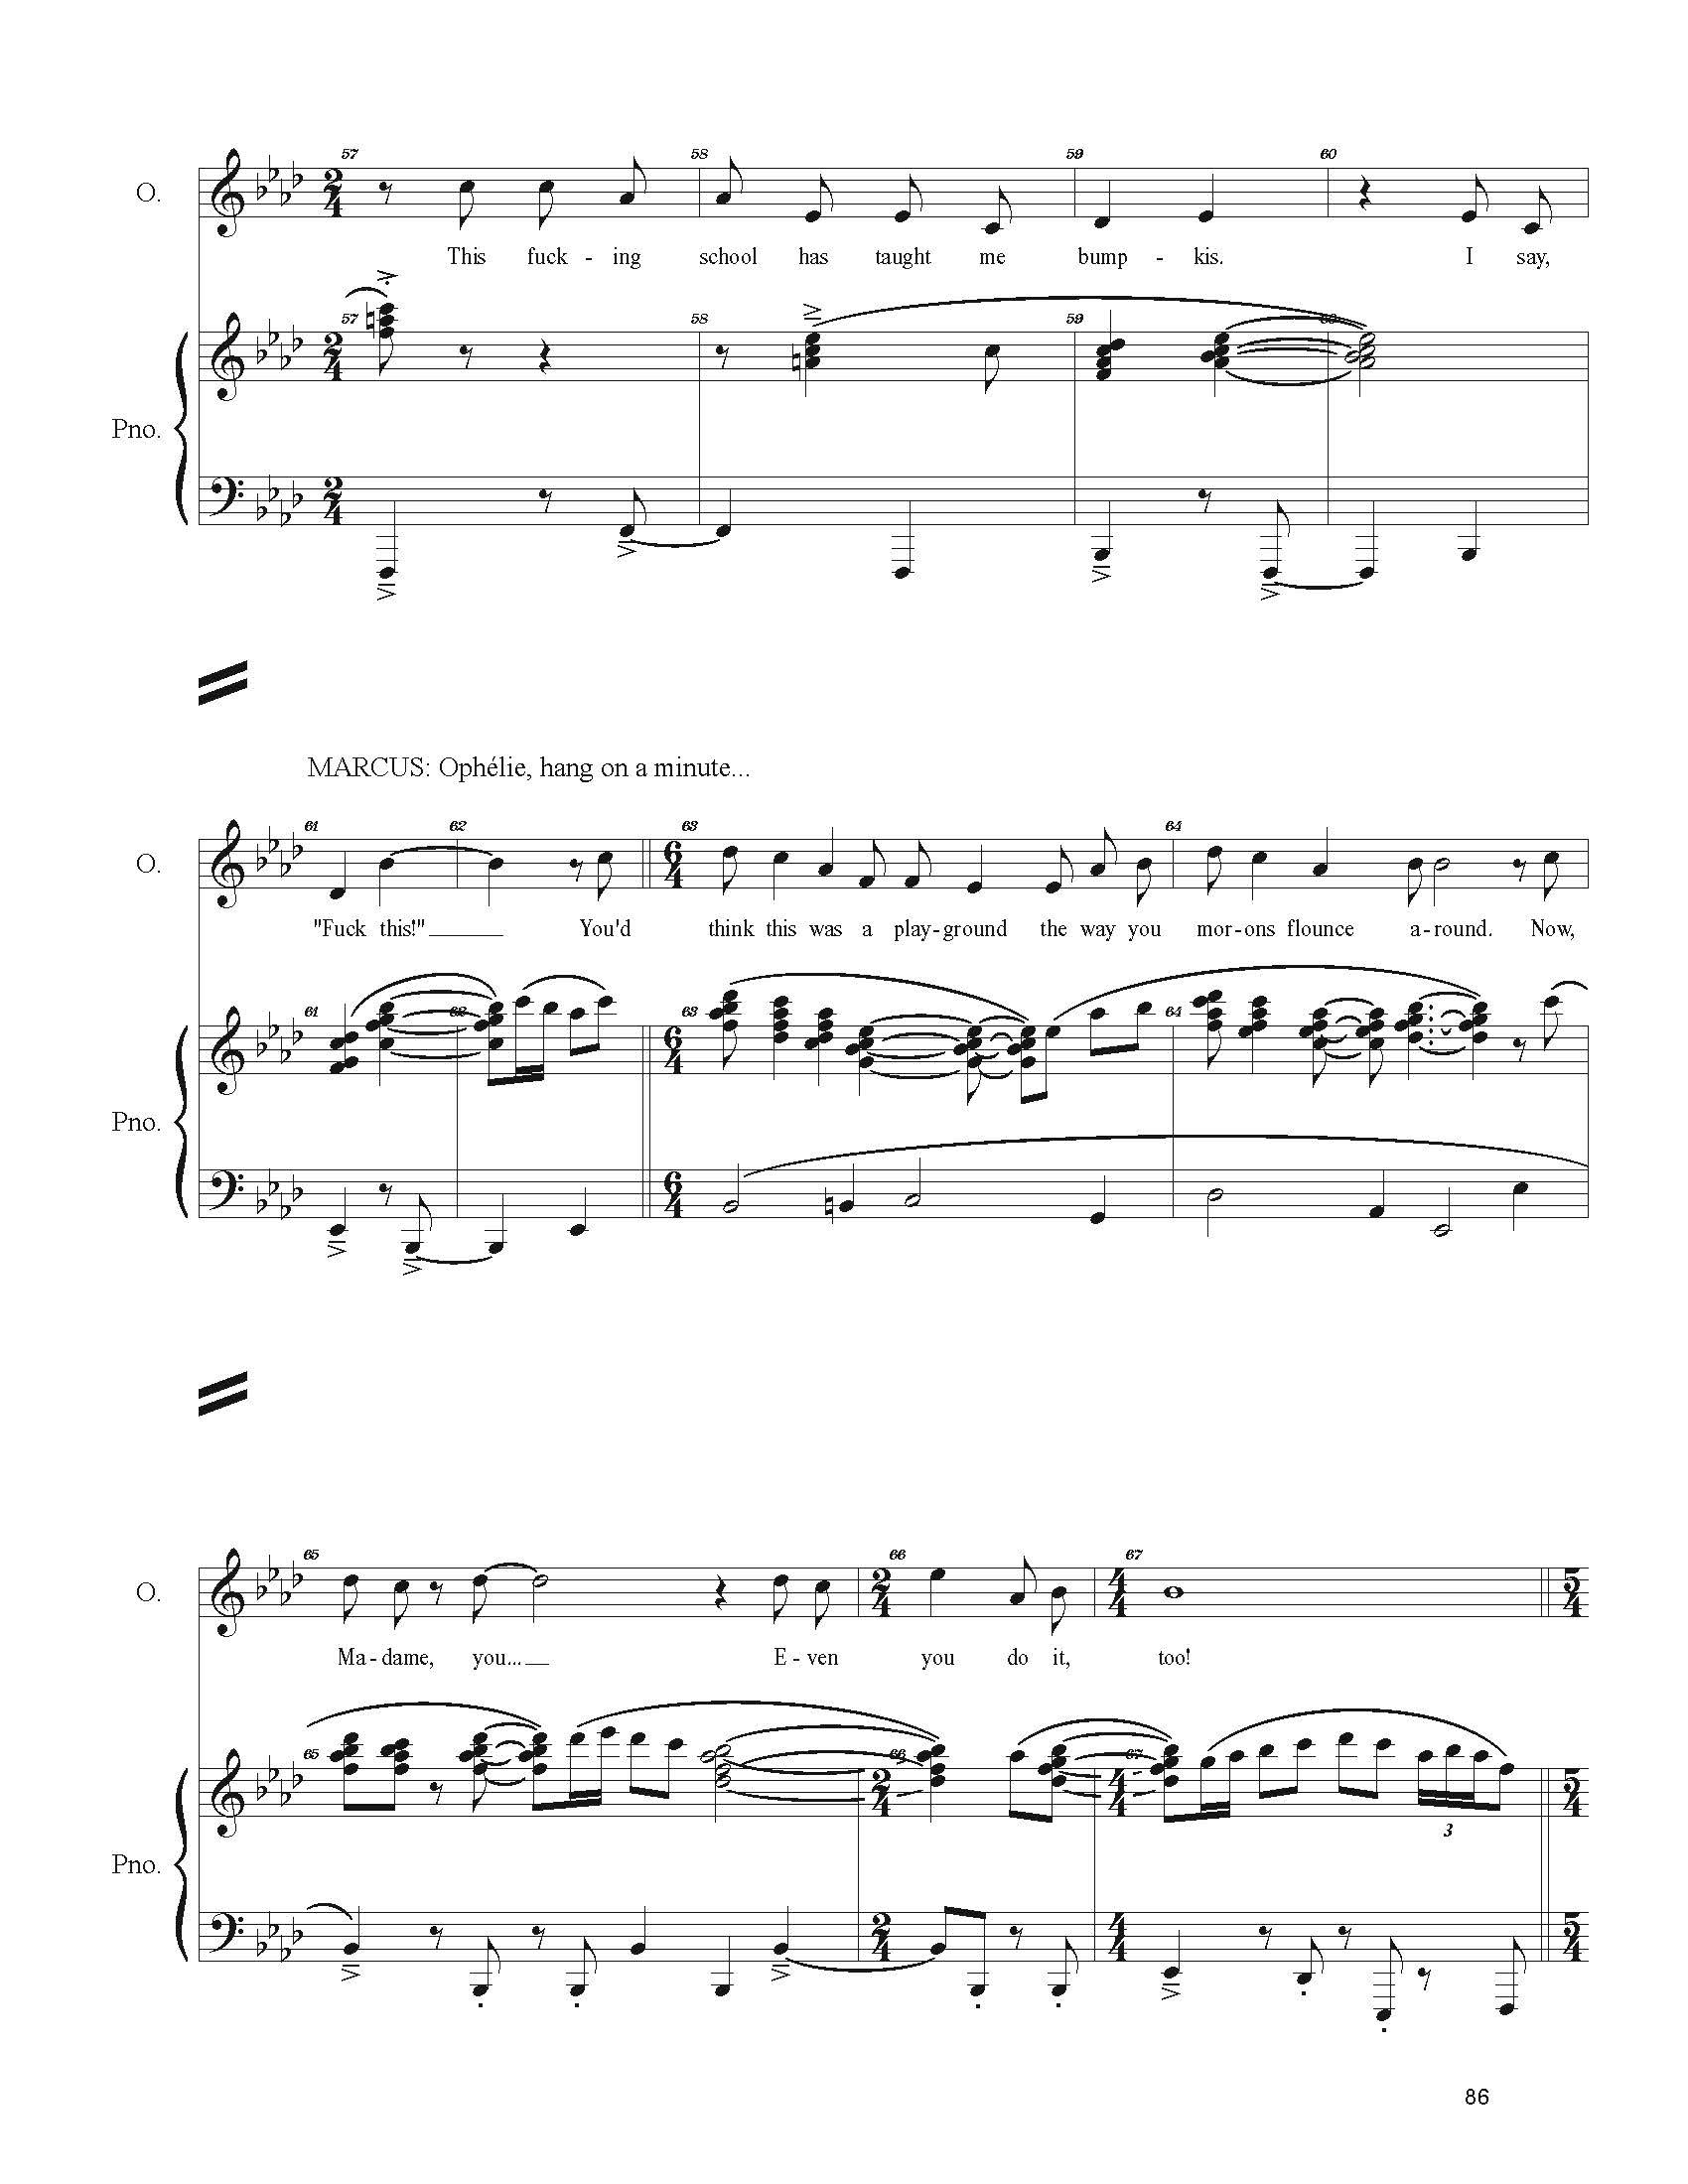 FULL PIANO VOCAL SCORE DRAFT 1 - Score_Page_086.jpg